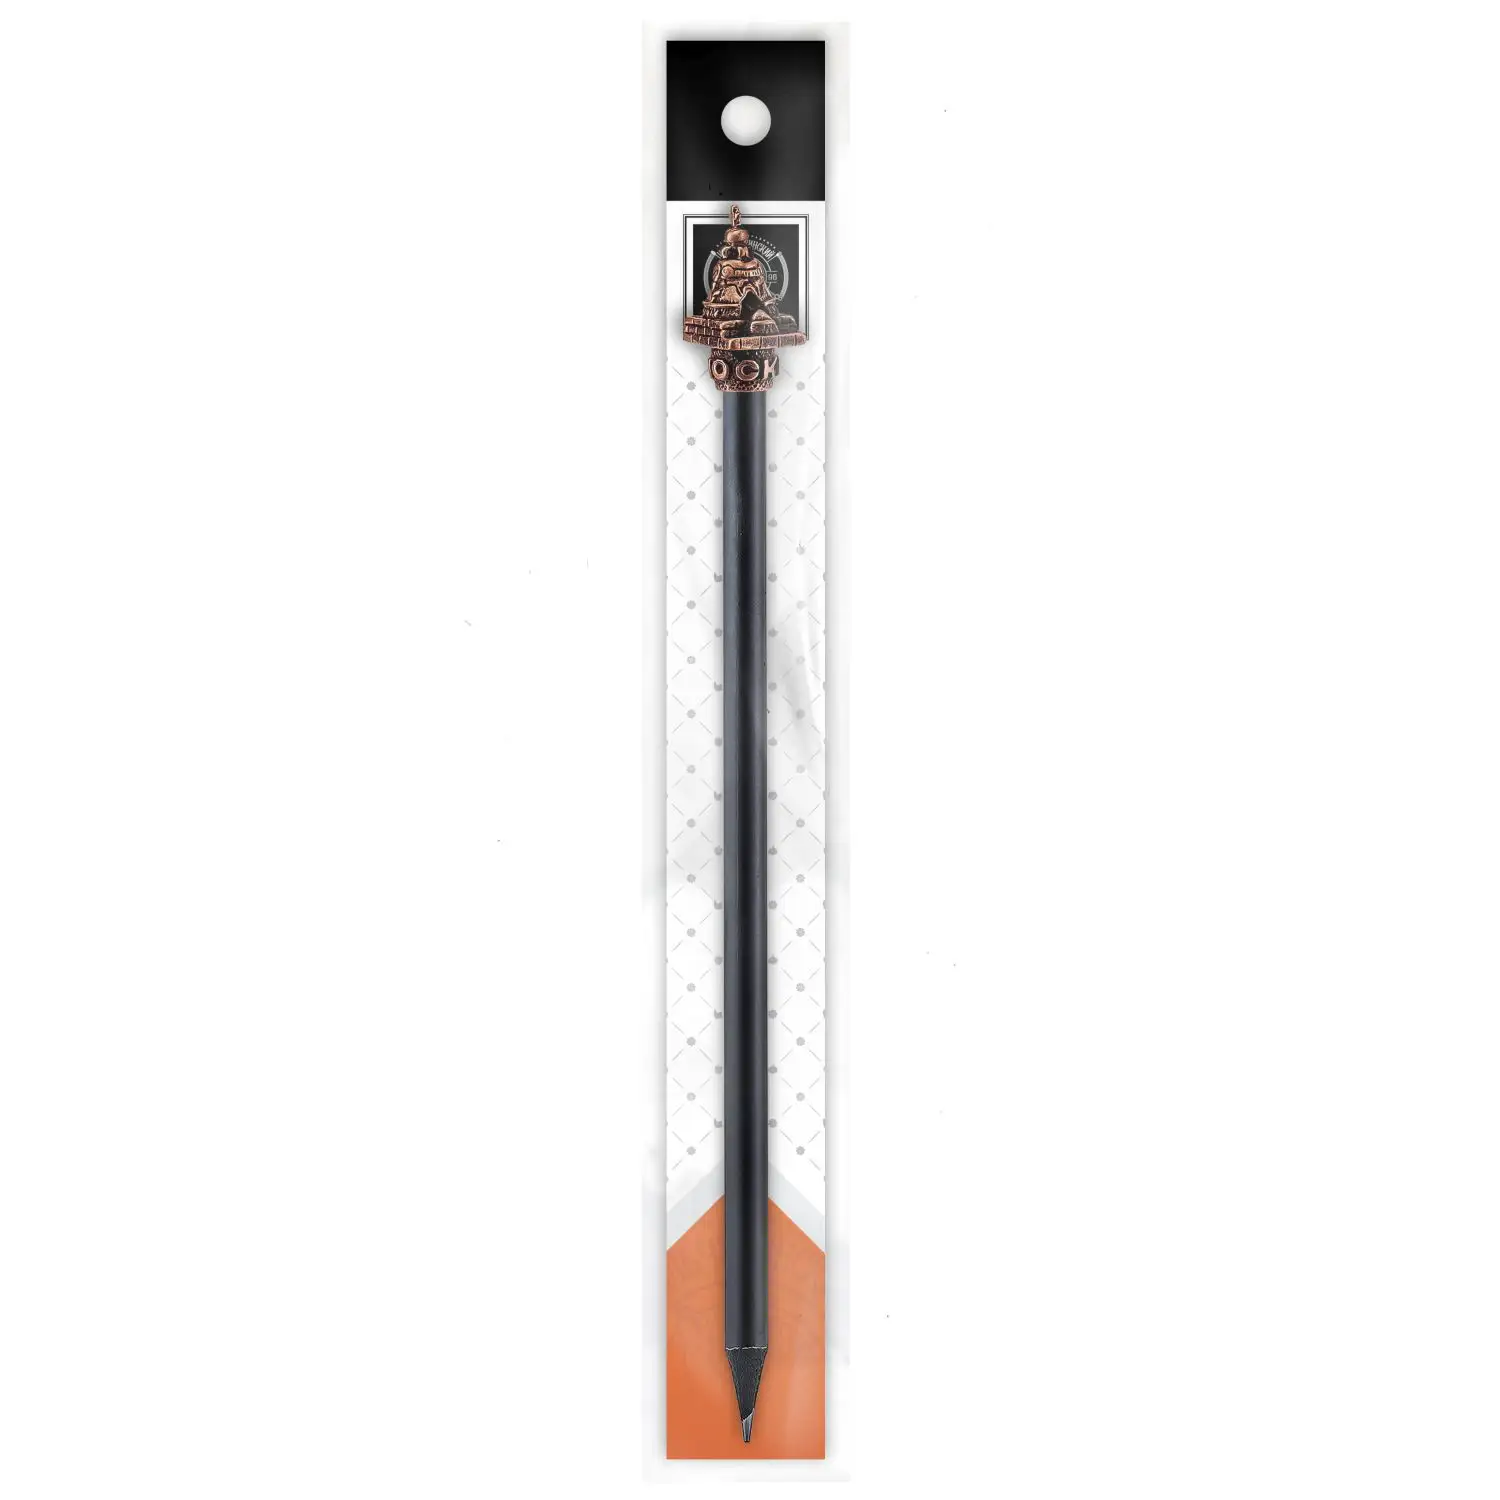 Карандаш Царь-колокол медный с чернением карандаш царь пушка медный с чернением футляр